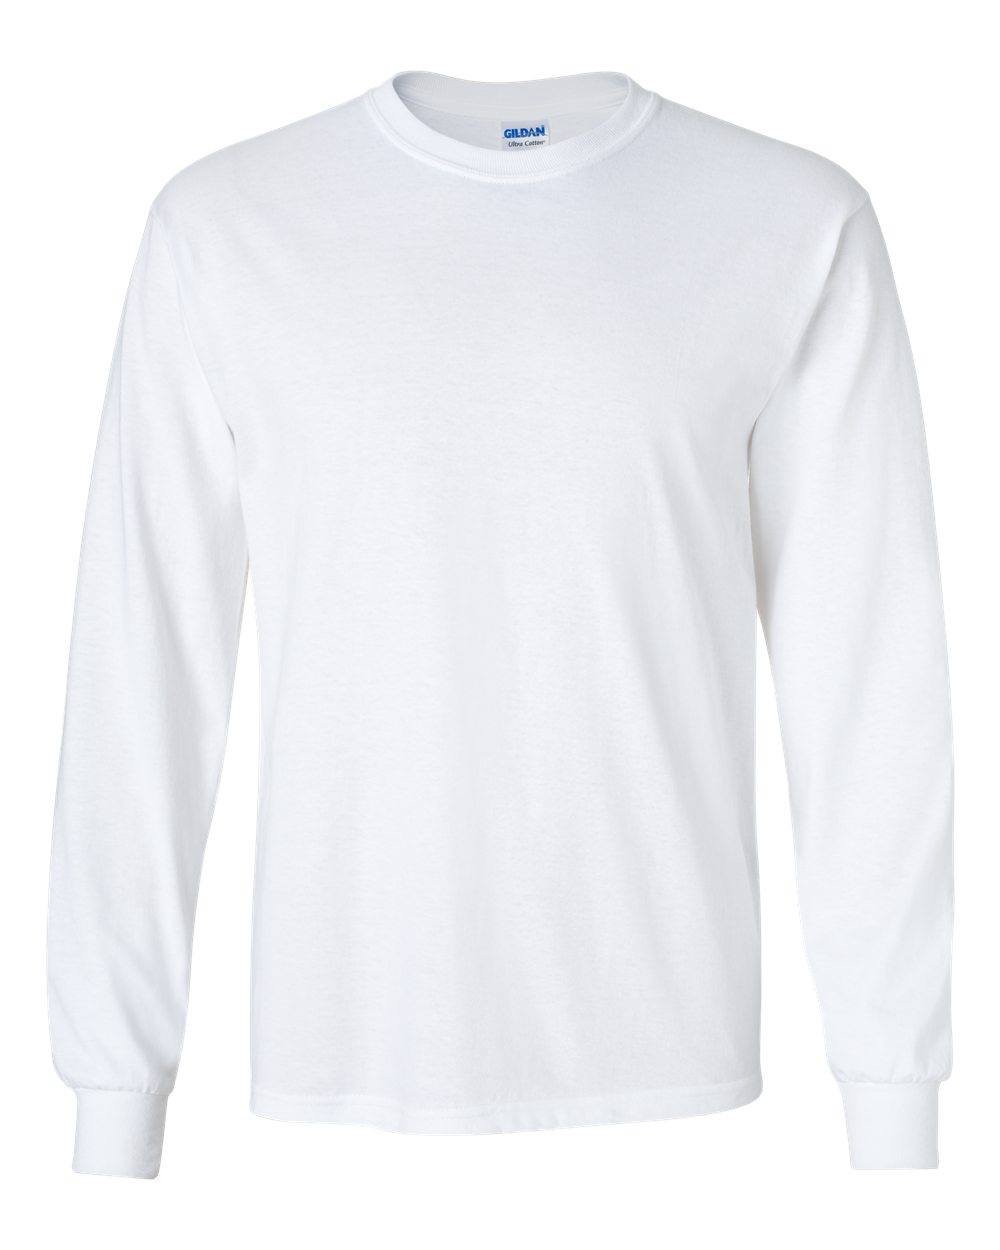 Gildan - Ultra Cotton Long Sleeve T-Shirt - 2400 | eBay